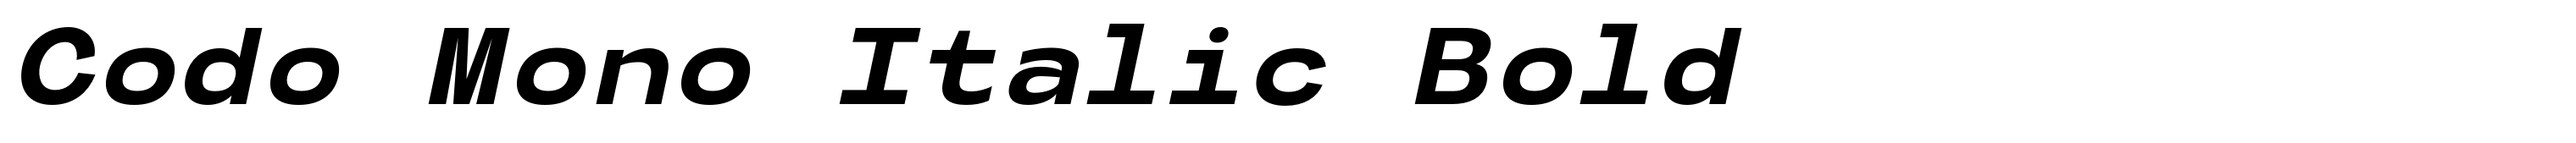 Codo Mono Italic Bold